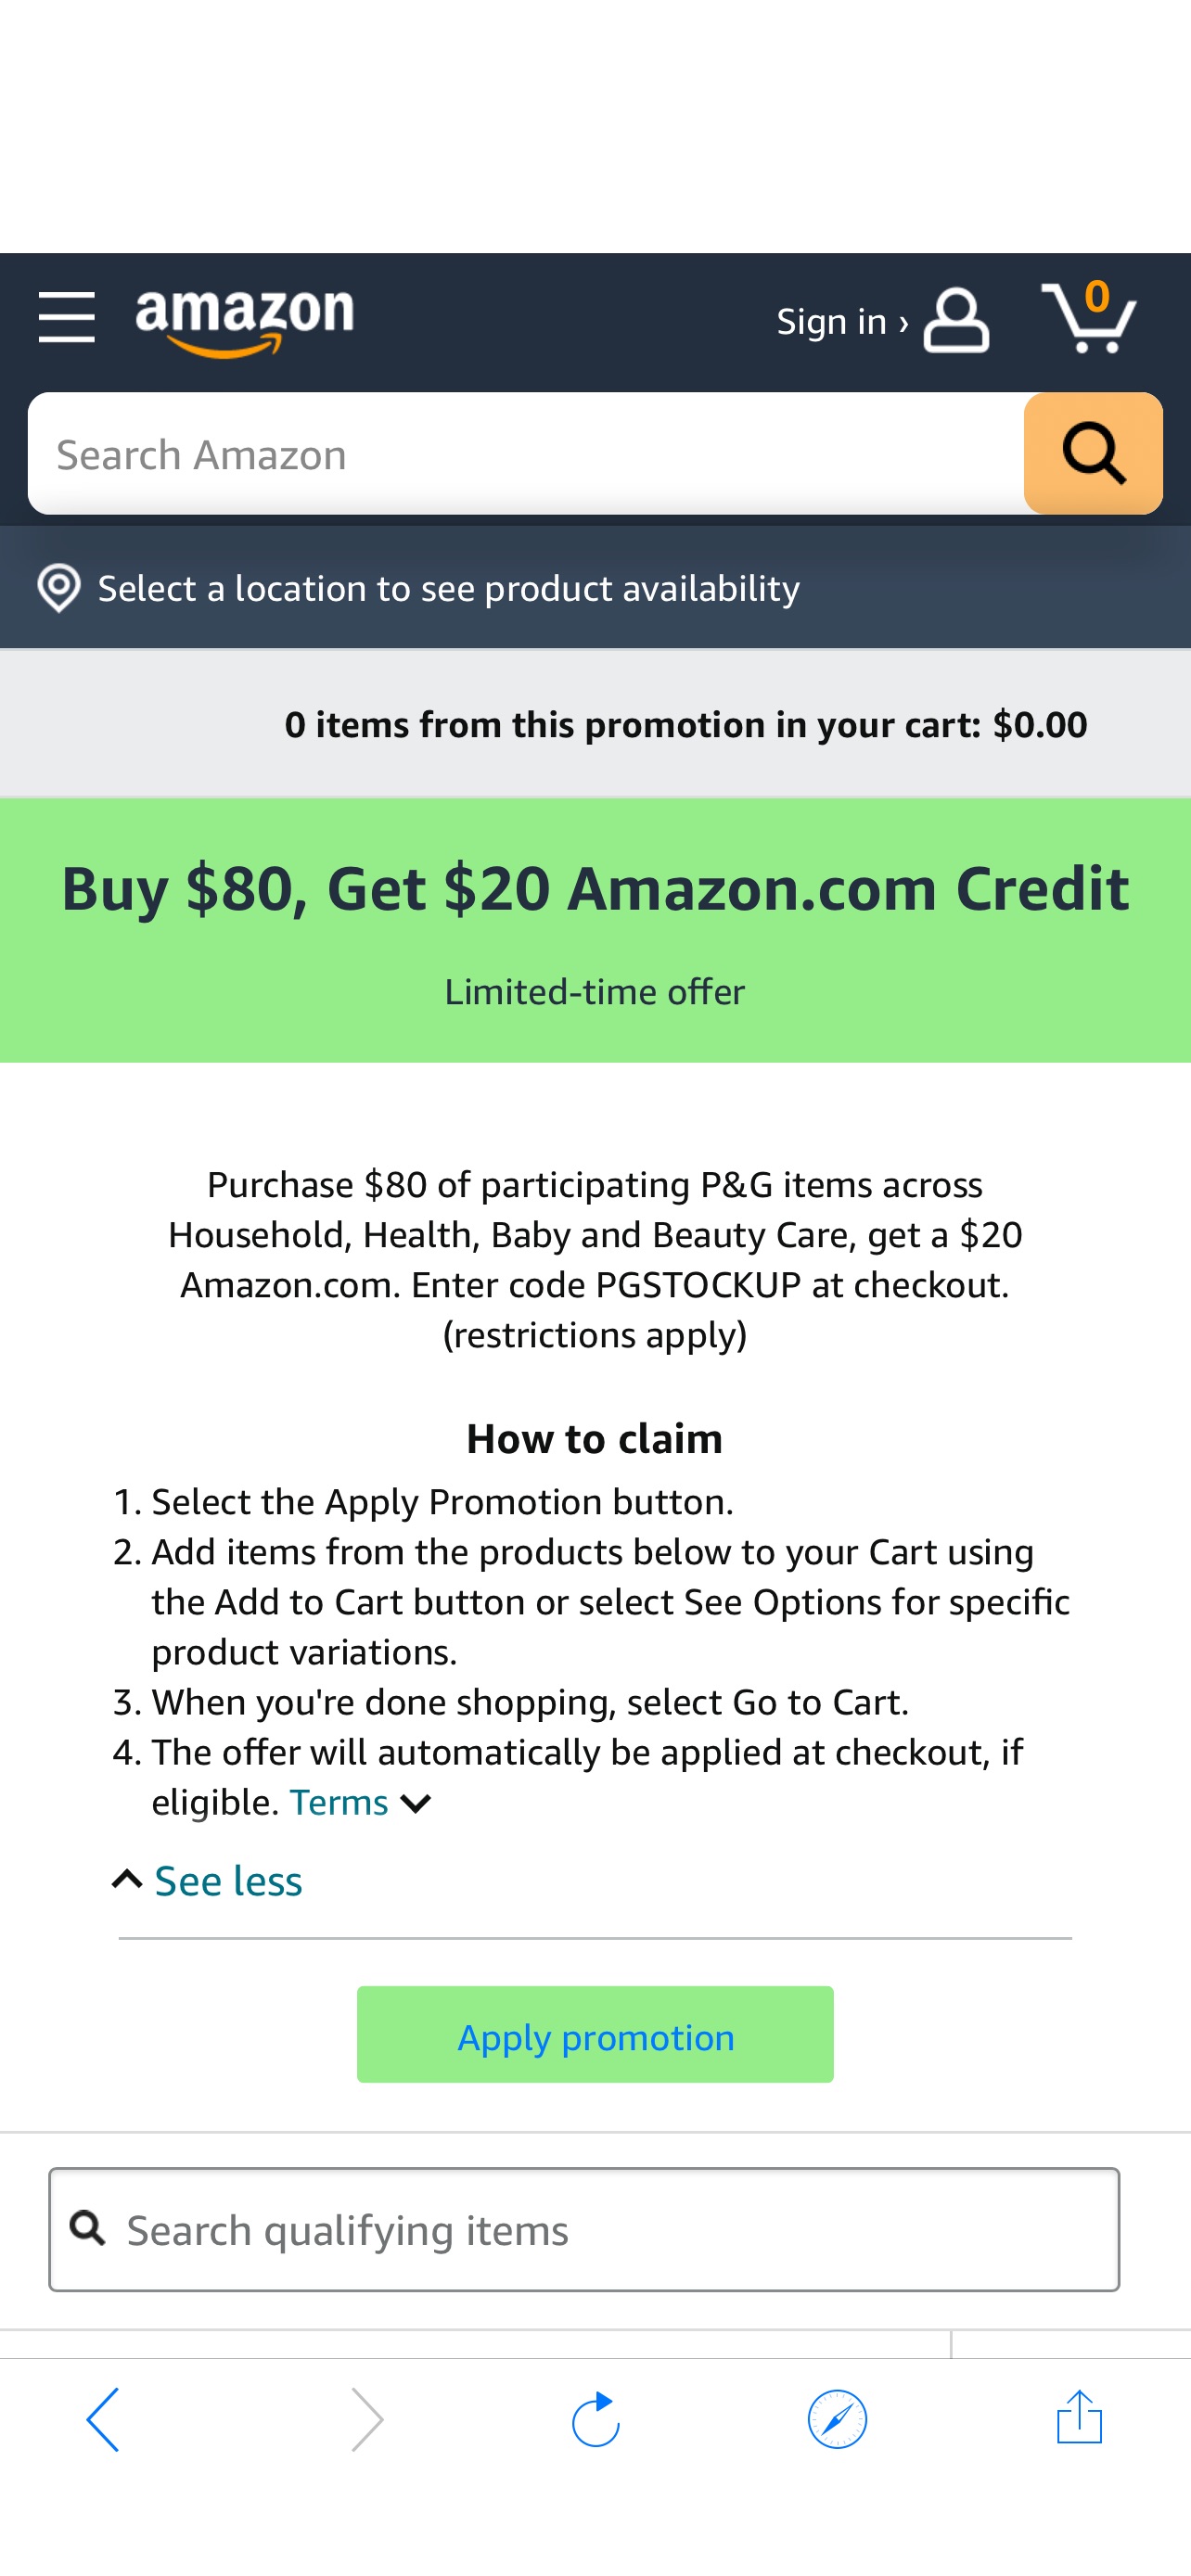 Amazon.com: Buy $80, Get $20 Amazon.com Credit promotion